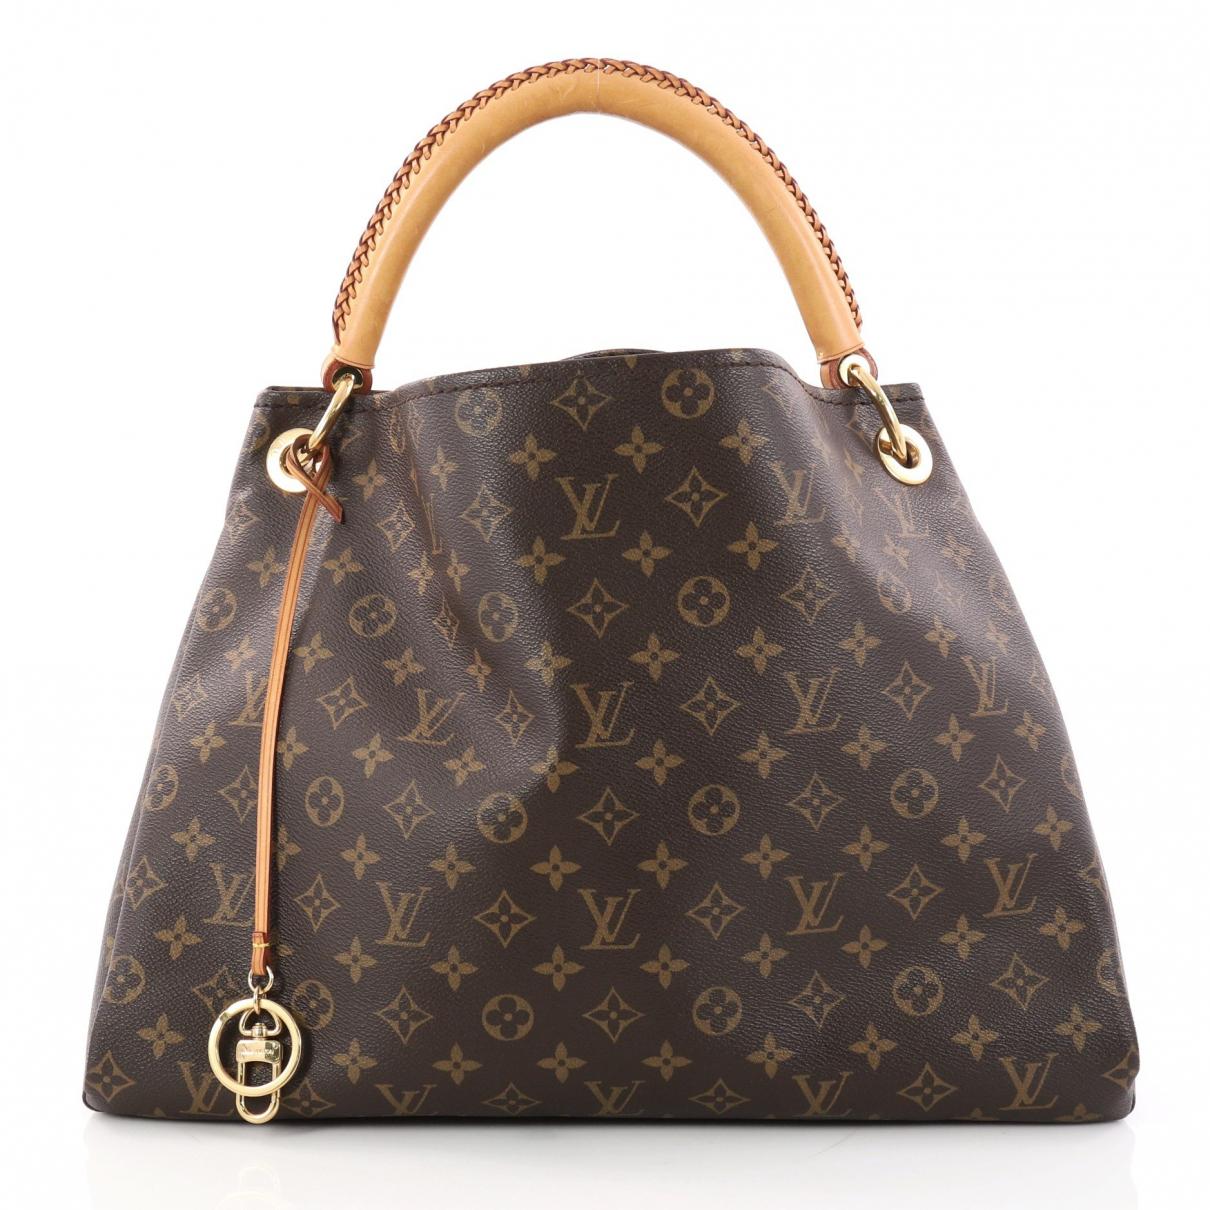 Louis Vuitton Artsy Leather Handbag in Brown - Lyst